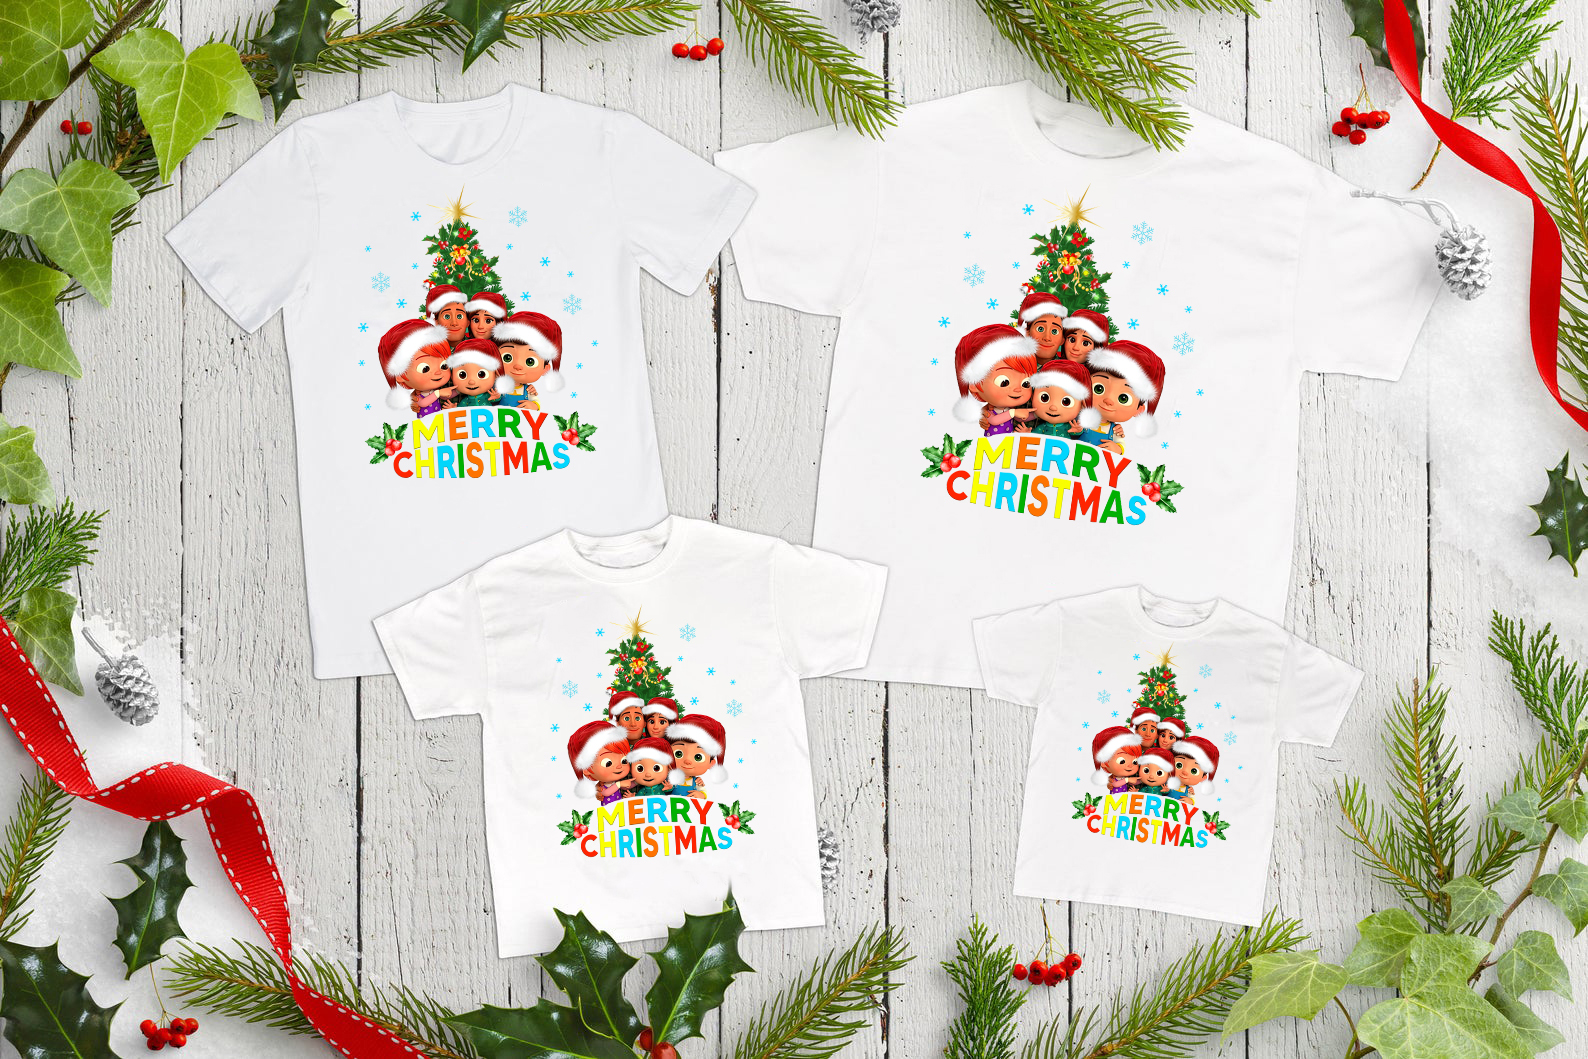 Merry Christmas Cocomelon Candy Cane Boy, Christmas Candy Cane, Cocomelon Christmas, Christmas Cocomelon Boy Shirt, chrismas family shirt